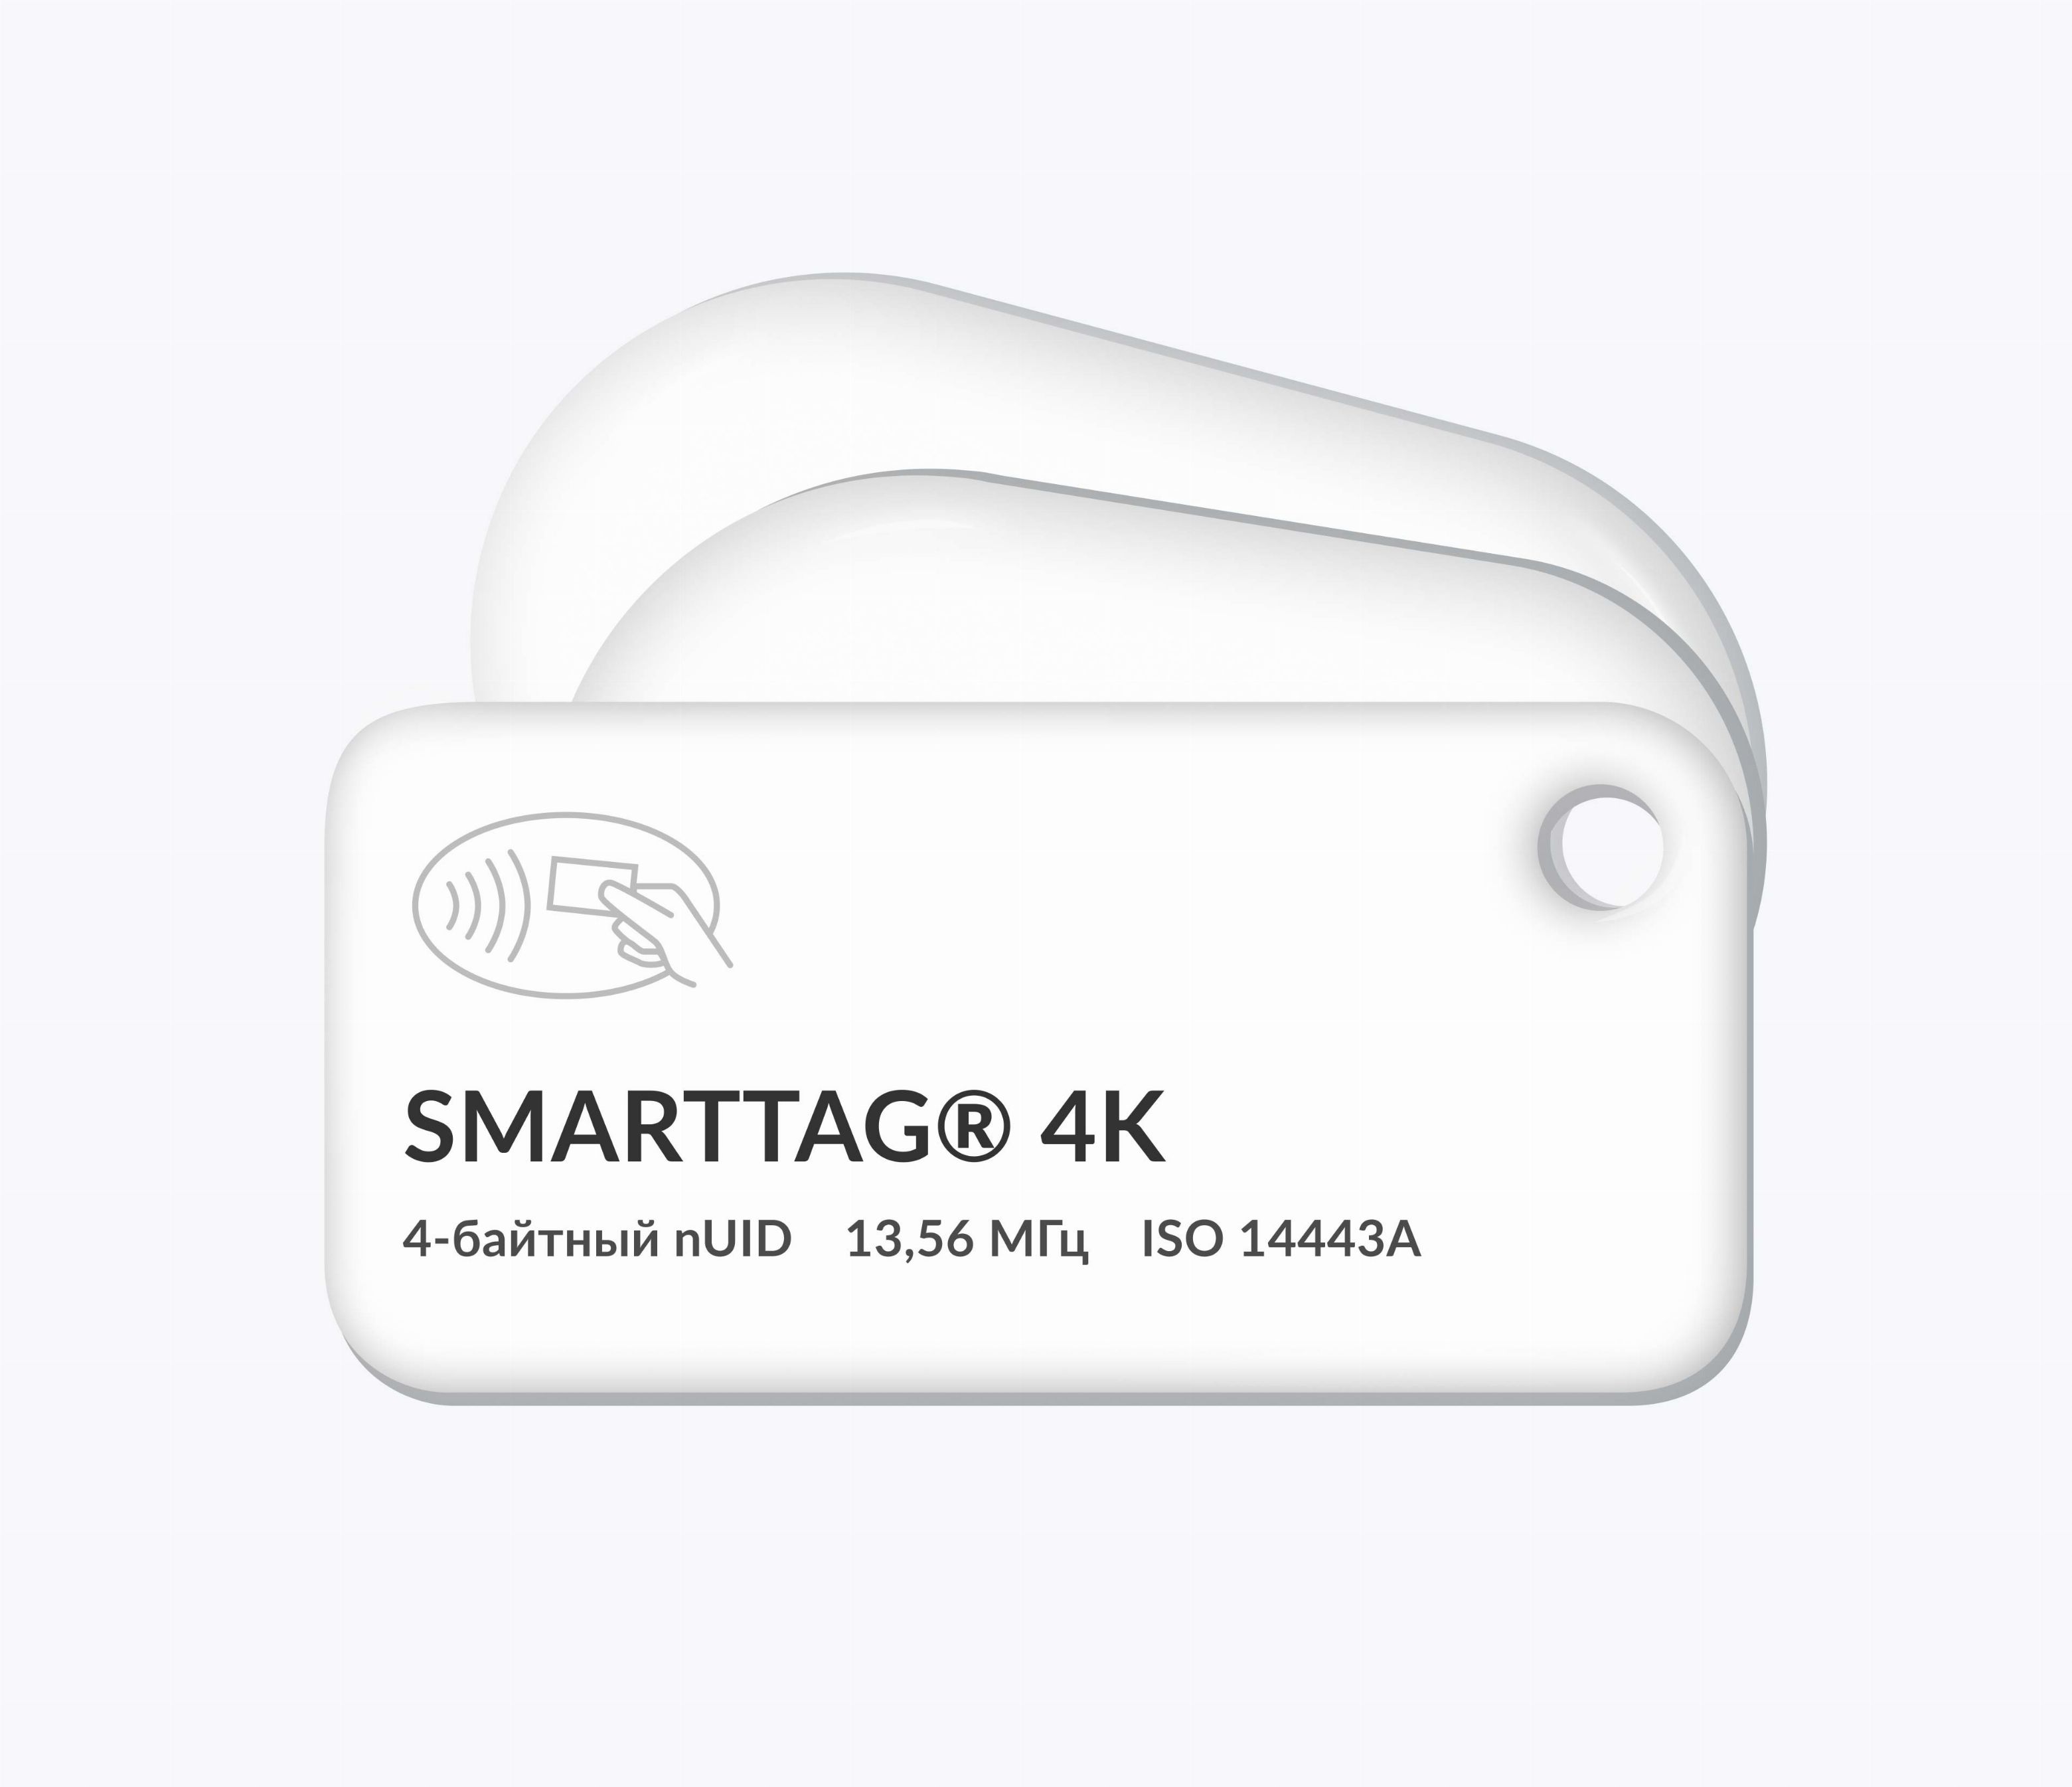 RFID-брелоки NEOKEY® с чипом SMARTTAG® 4k 4 byte nUID и вашим логотипом RFID-брелоки NEOKEY® с чипом SMARTTAG® 4k 4 byte nUID и вашим логотипом